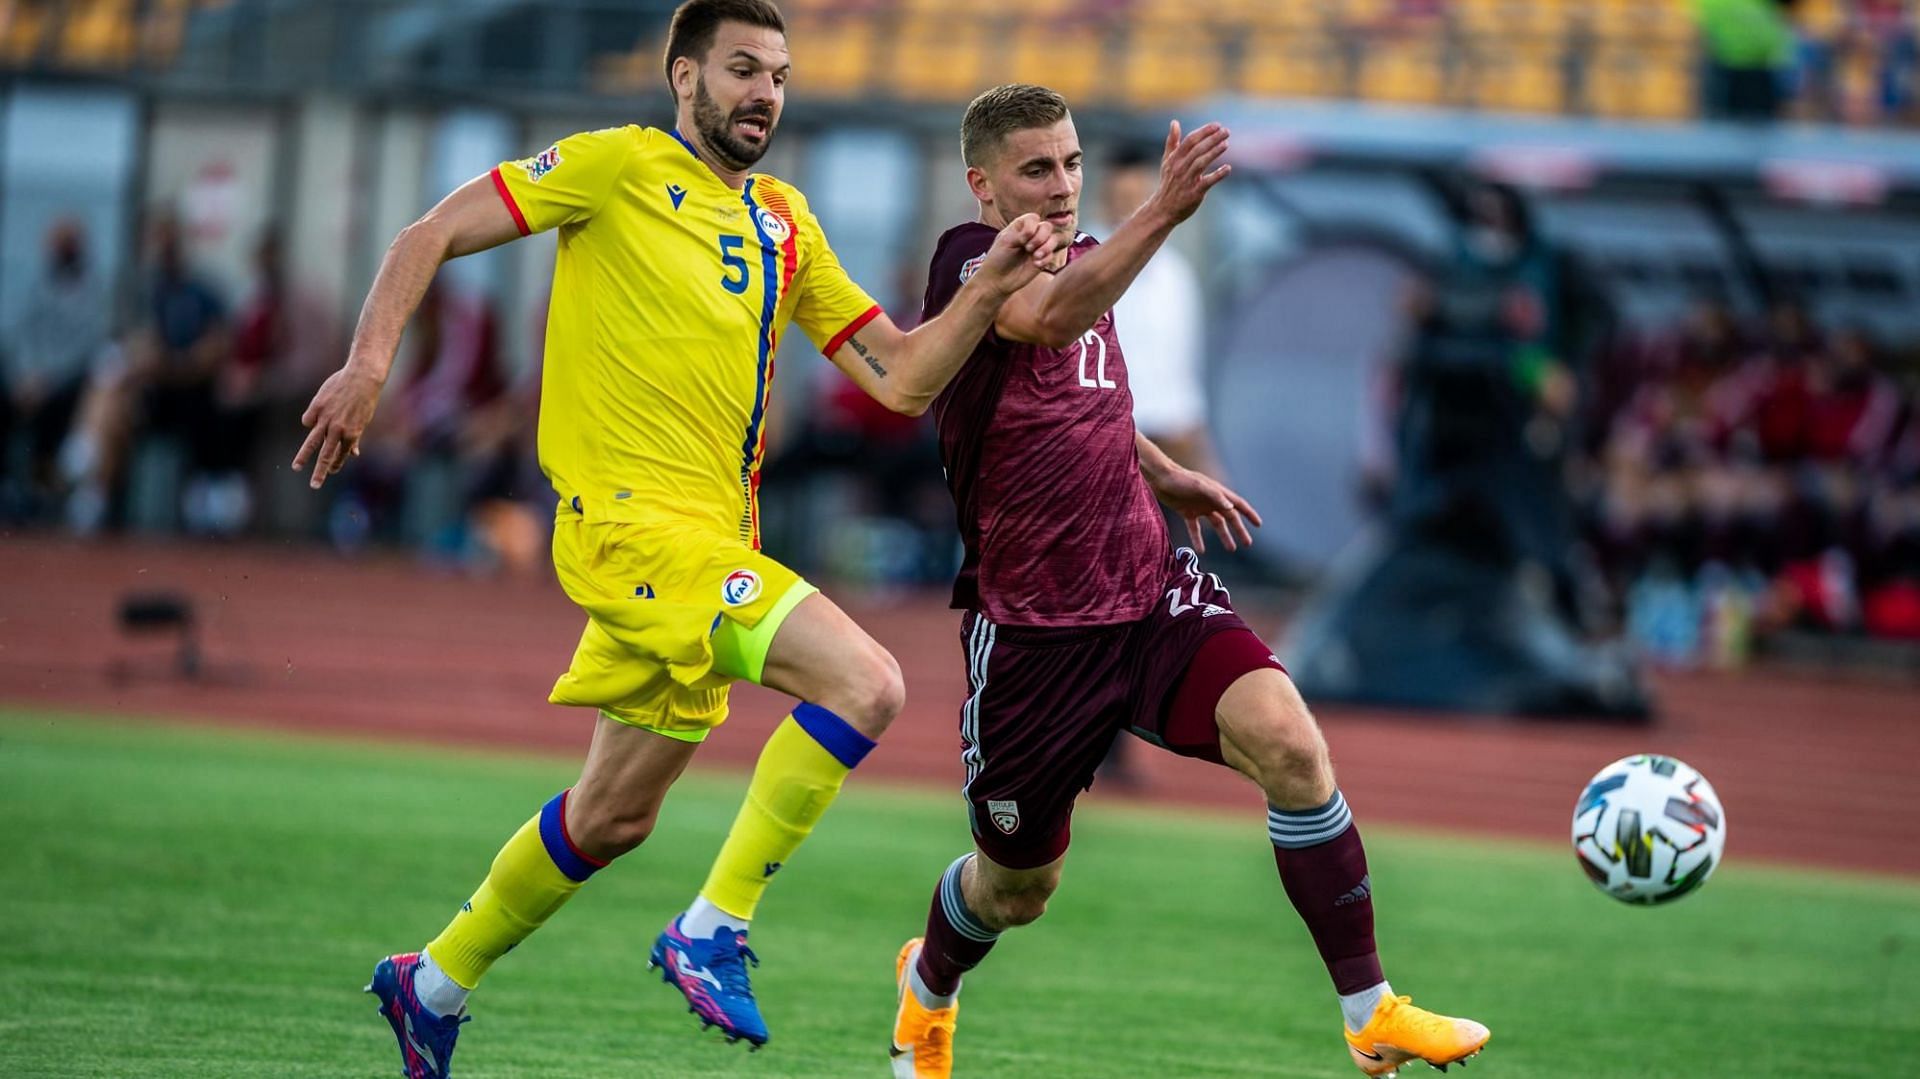 Latvia will take on Liechtenstein in their Nations League fixture on Monday